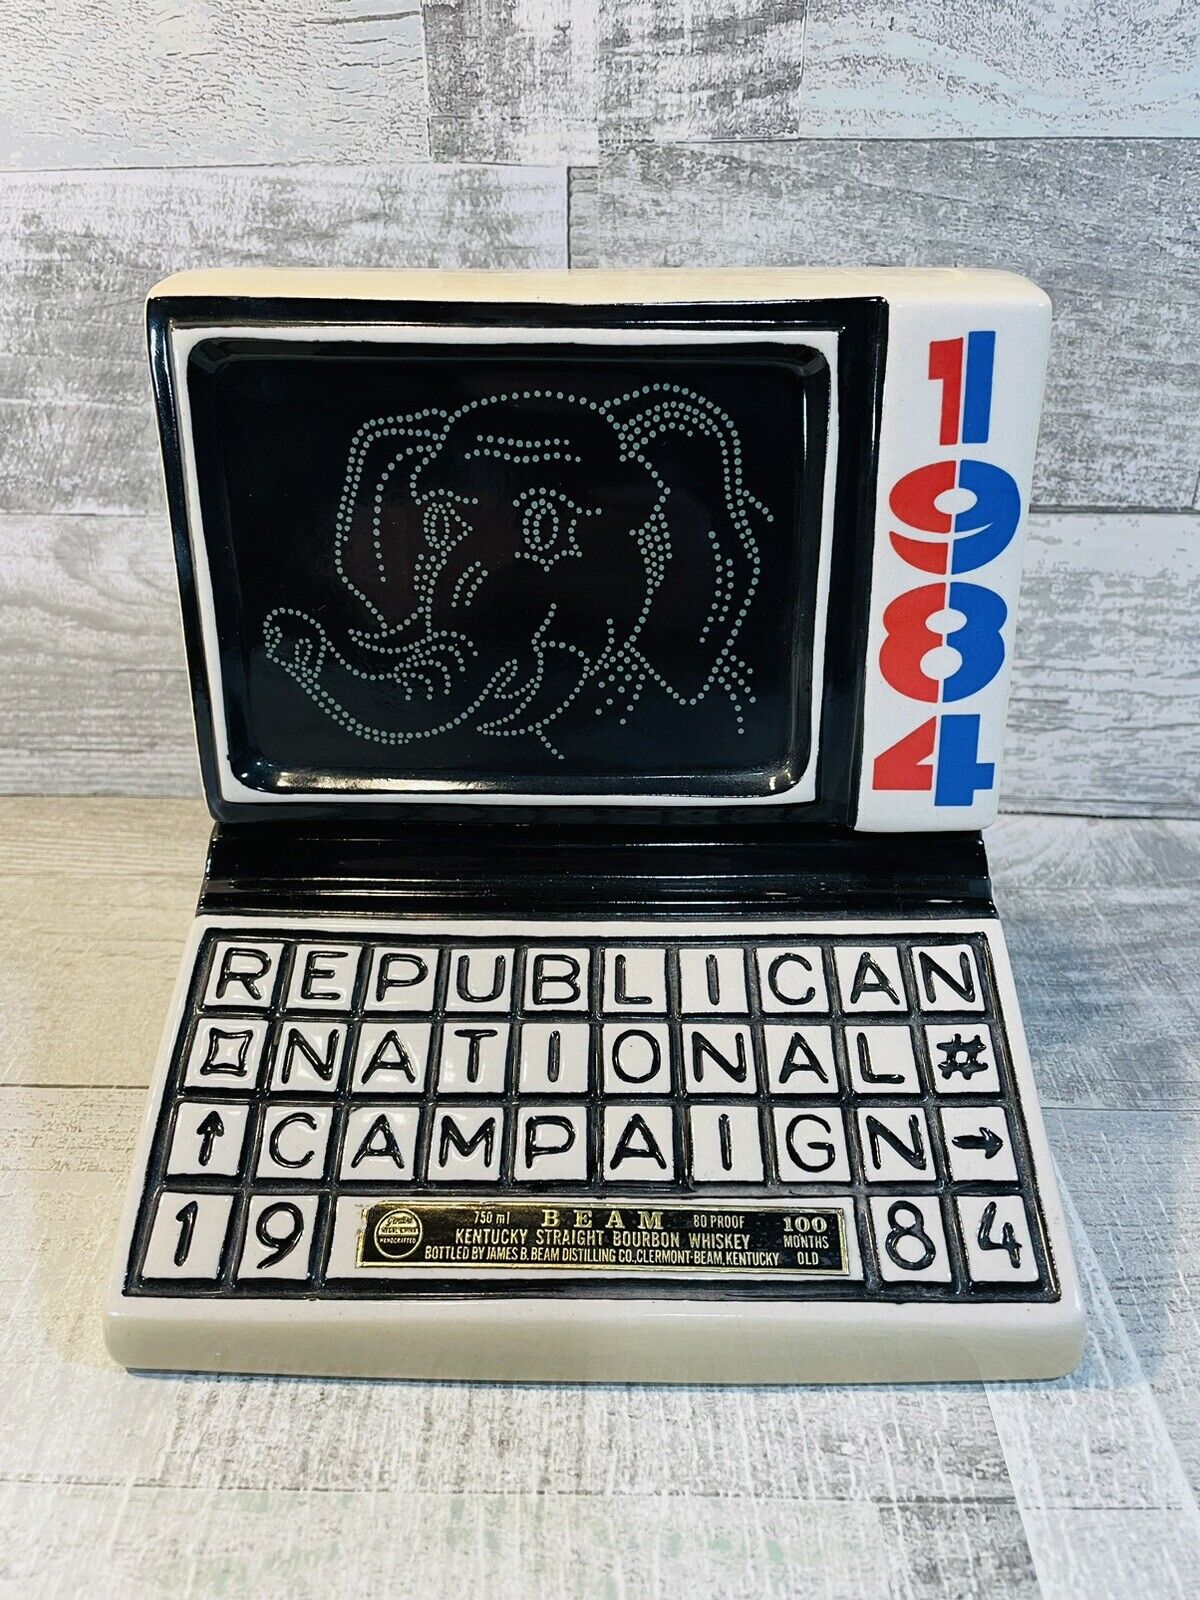 1984 Republican National Campaign Jim Beam Computer Decanter Vintage